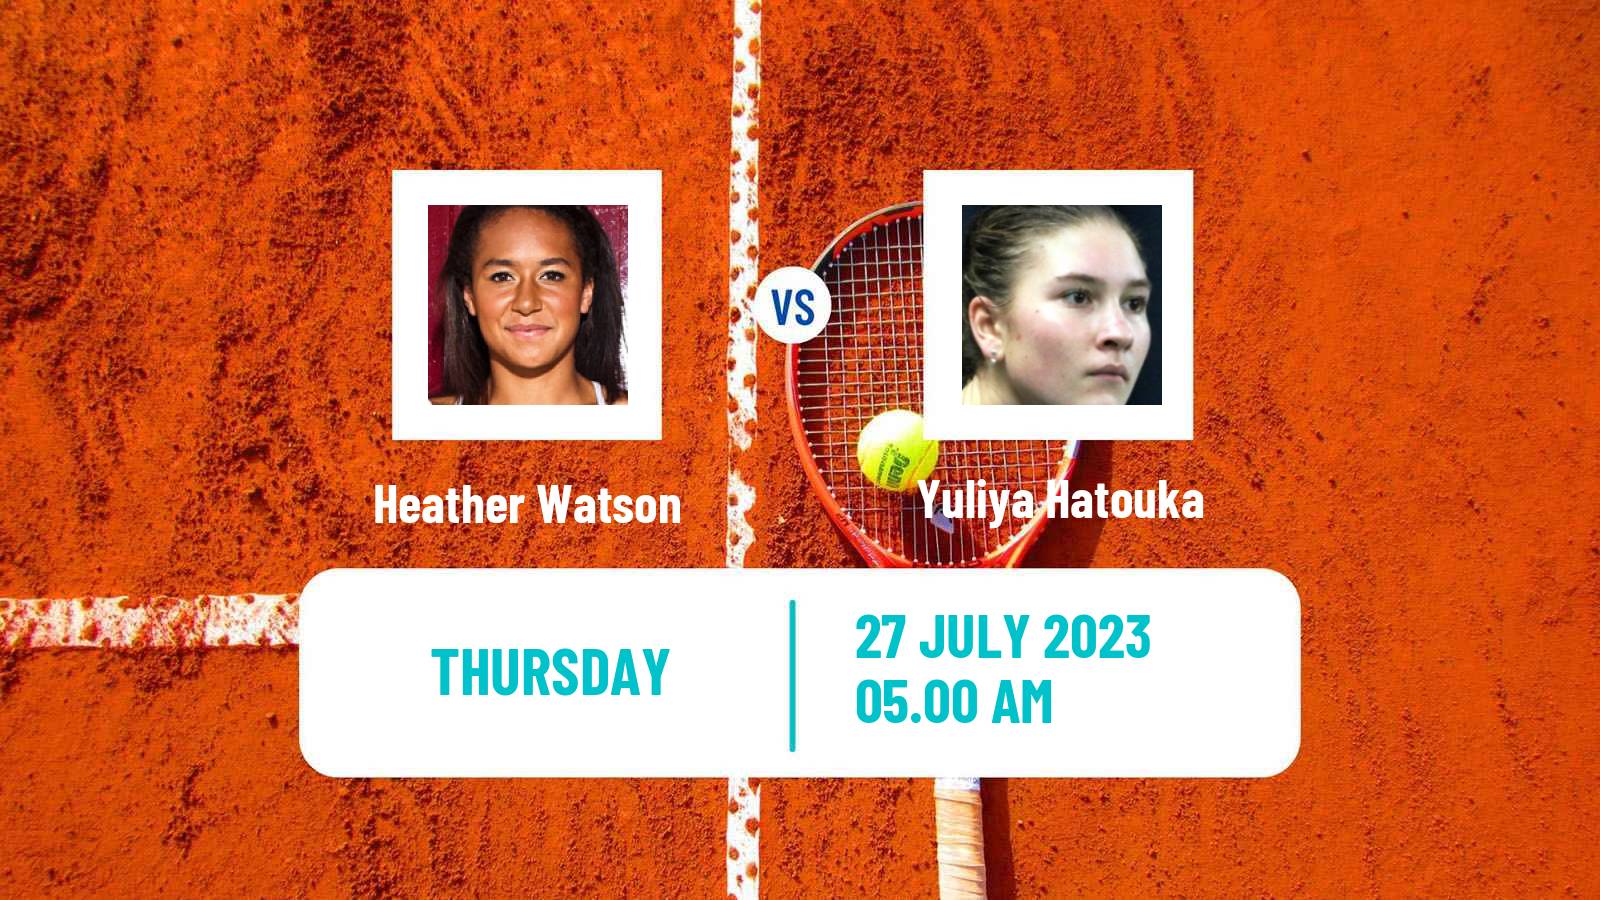 Tennis WTA Warsaw Heather Watson - Yuliya Hatouka